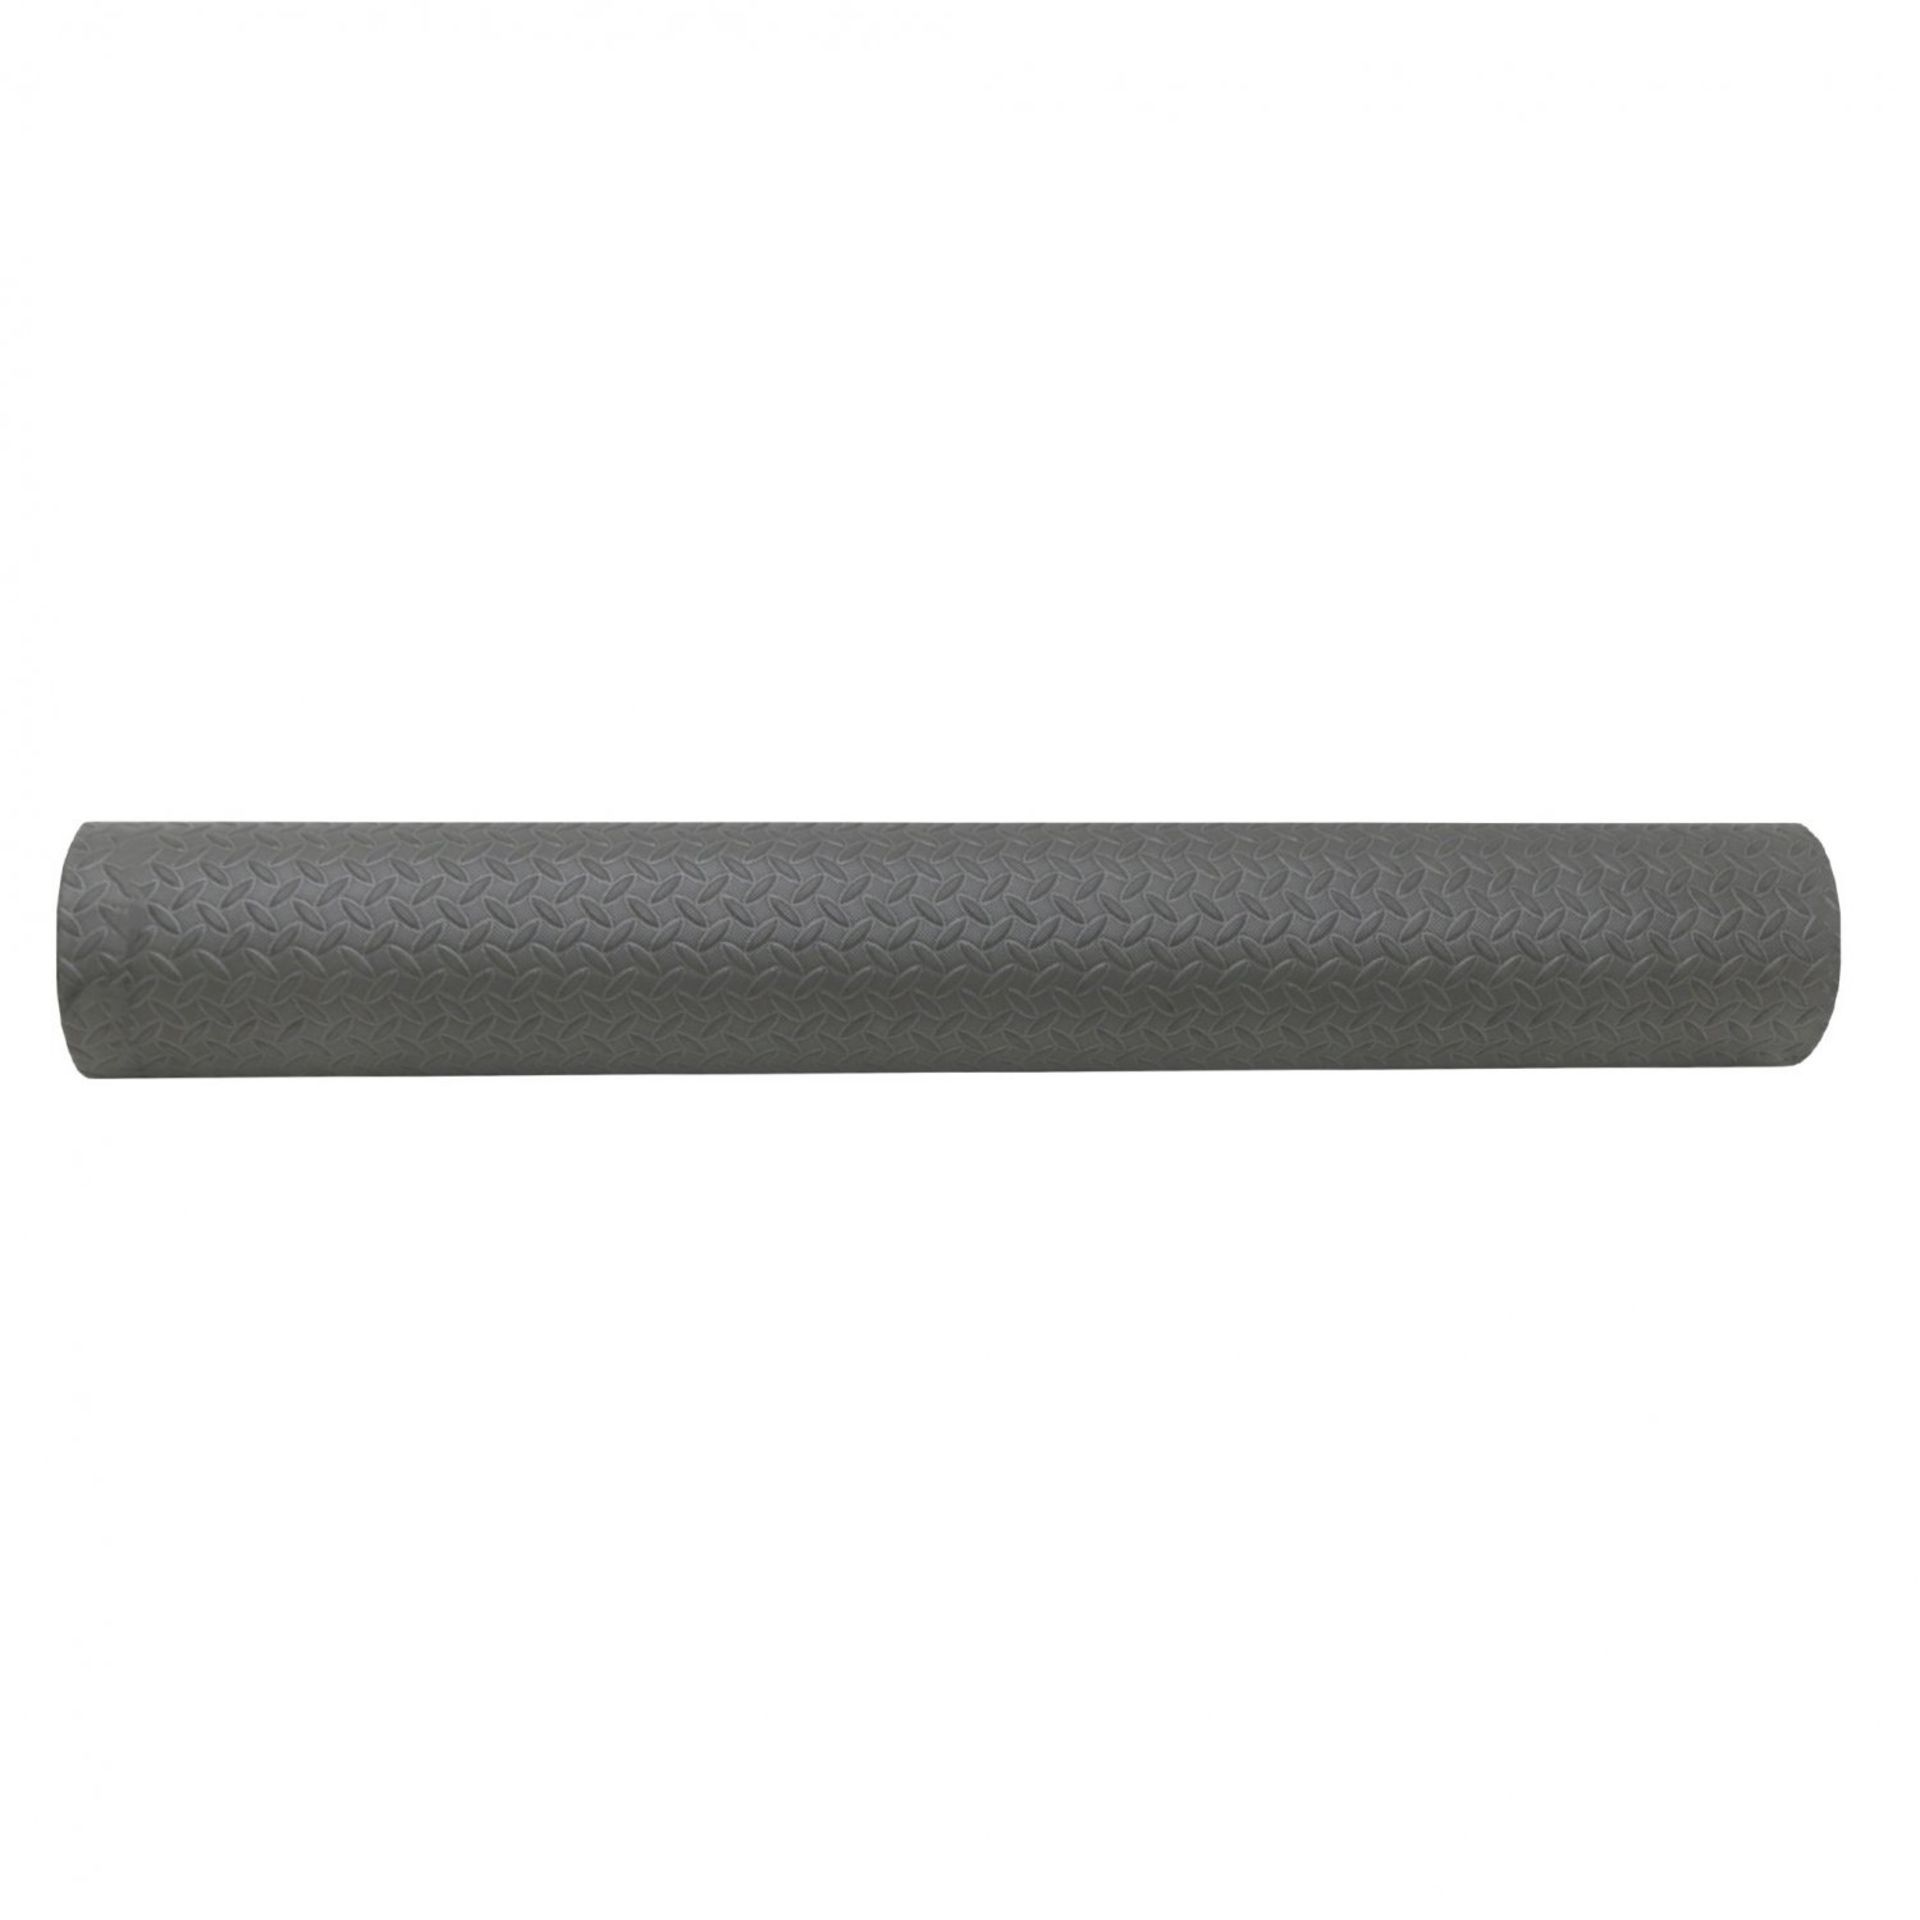 (L5) Large Multi-Purpose Safety EVA Floor Mat Play Garage Gym Matting Dimensions: 233 x 118cm ... - Image 2 of 2